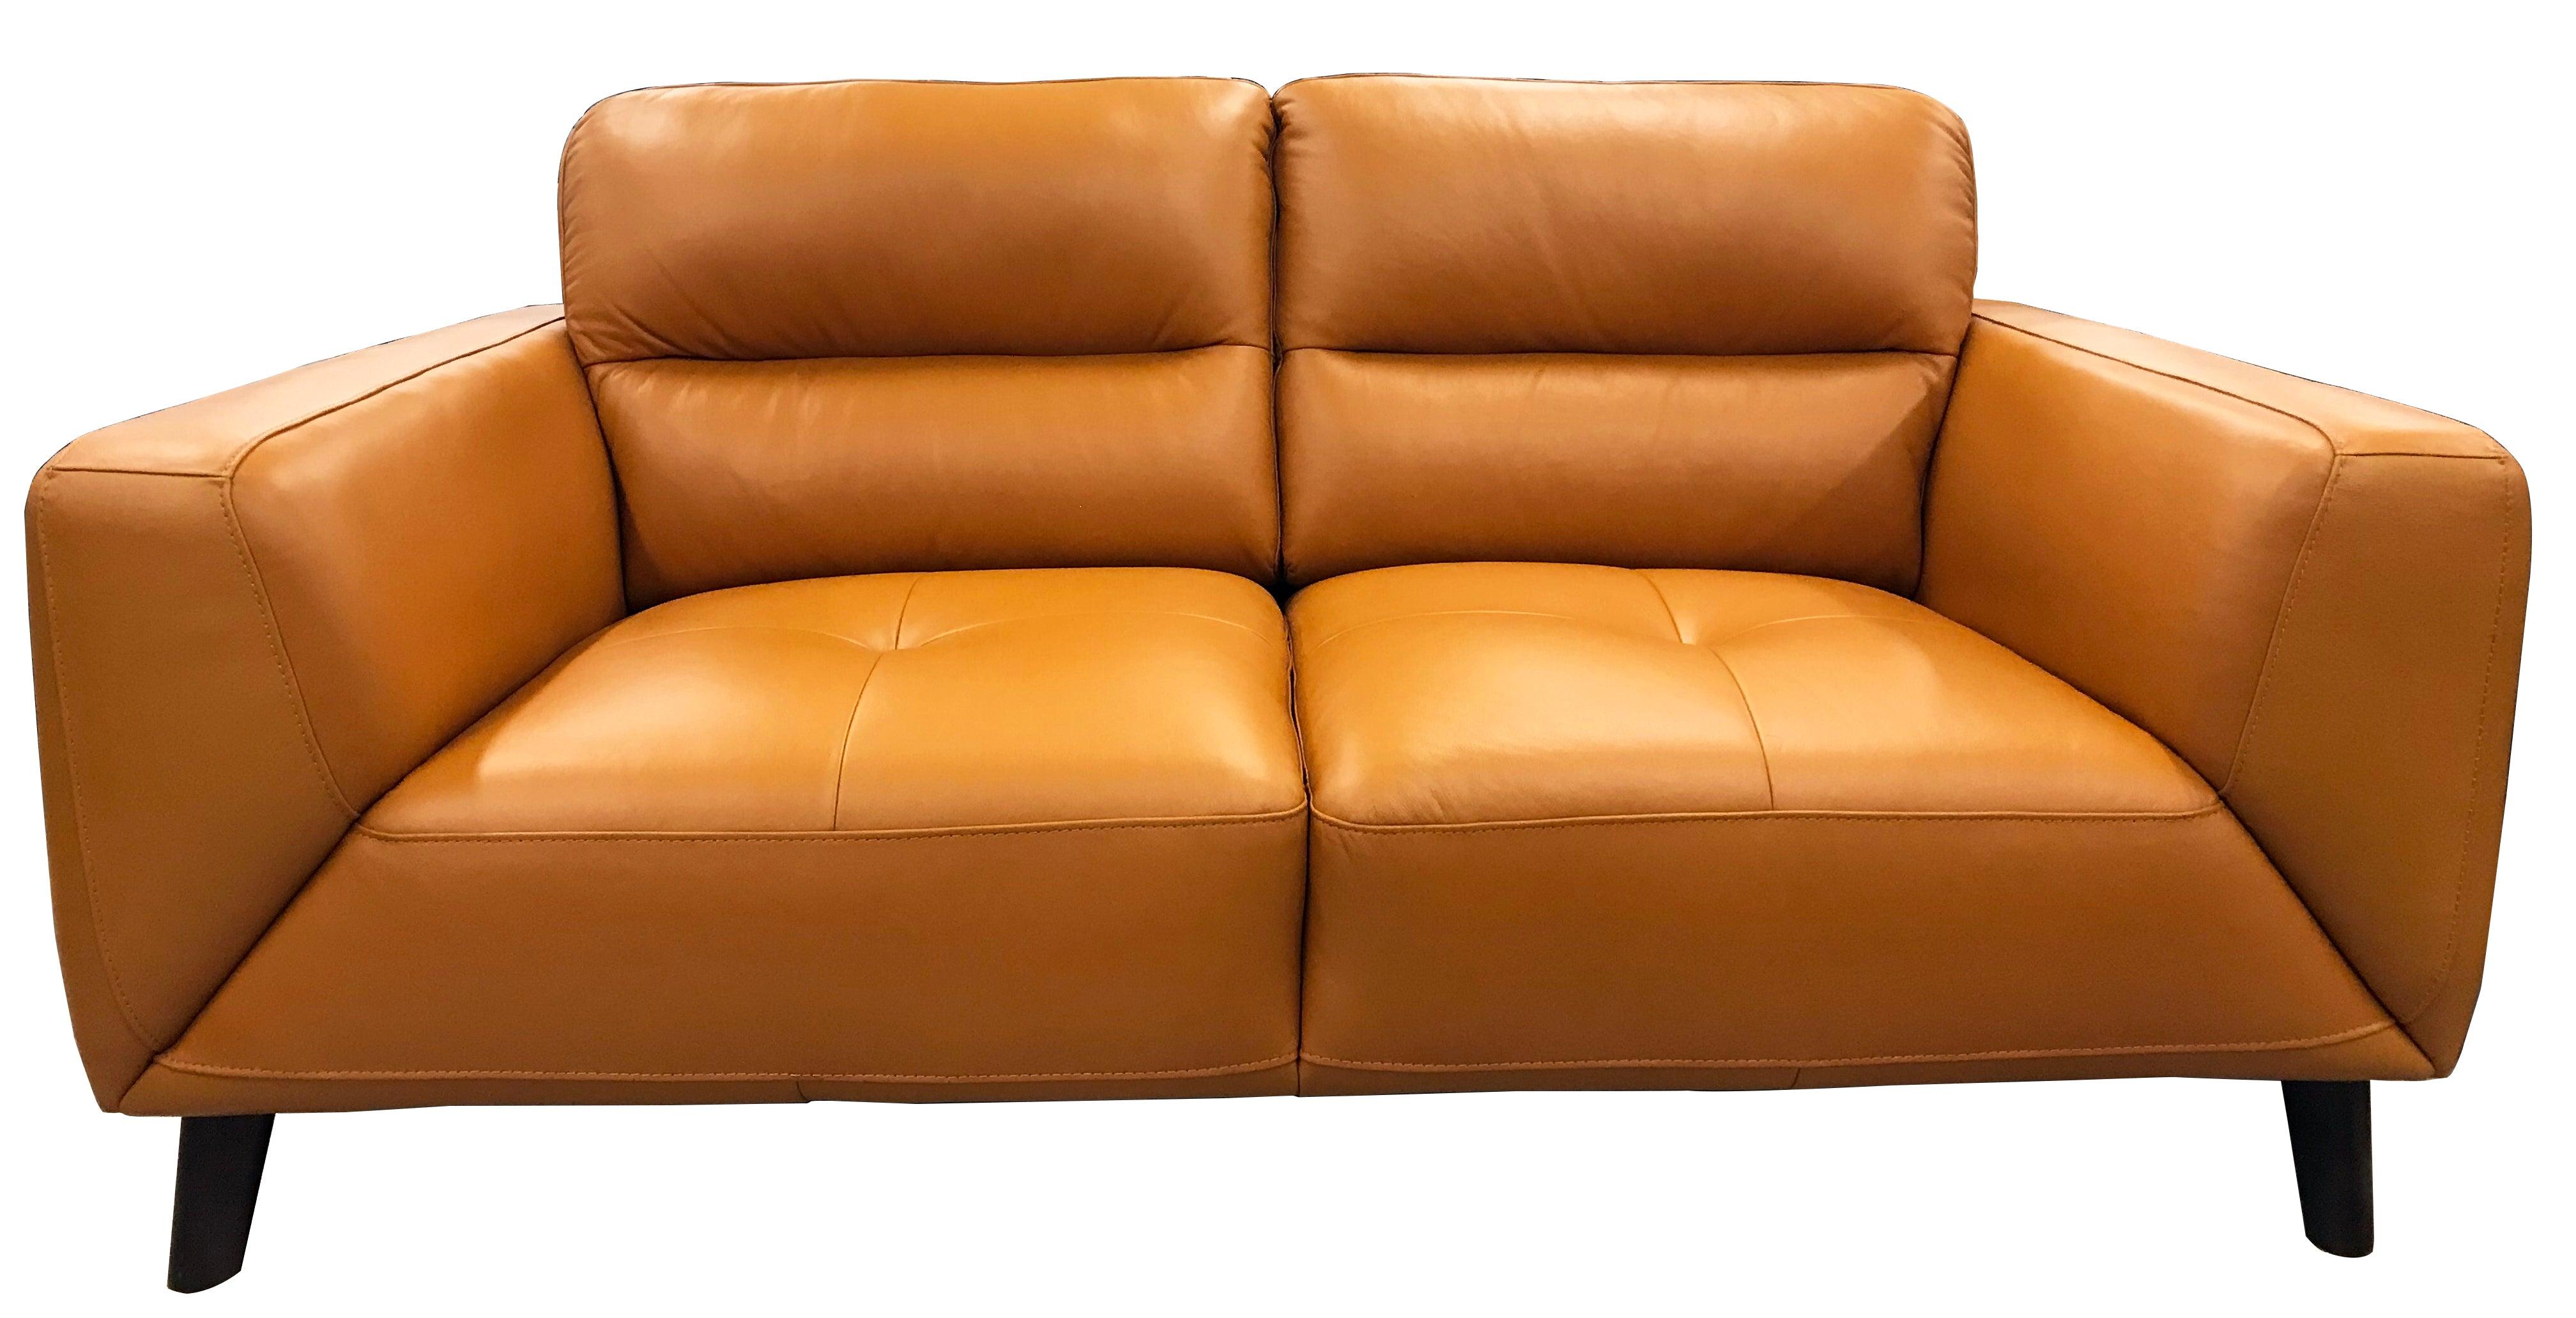 Tanster 2 Seater Leather Sofa Tangerine - Furniture Castle